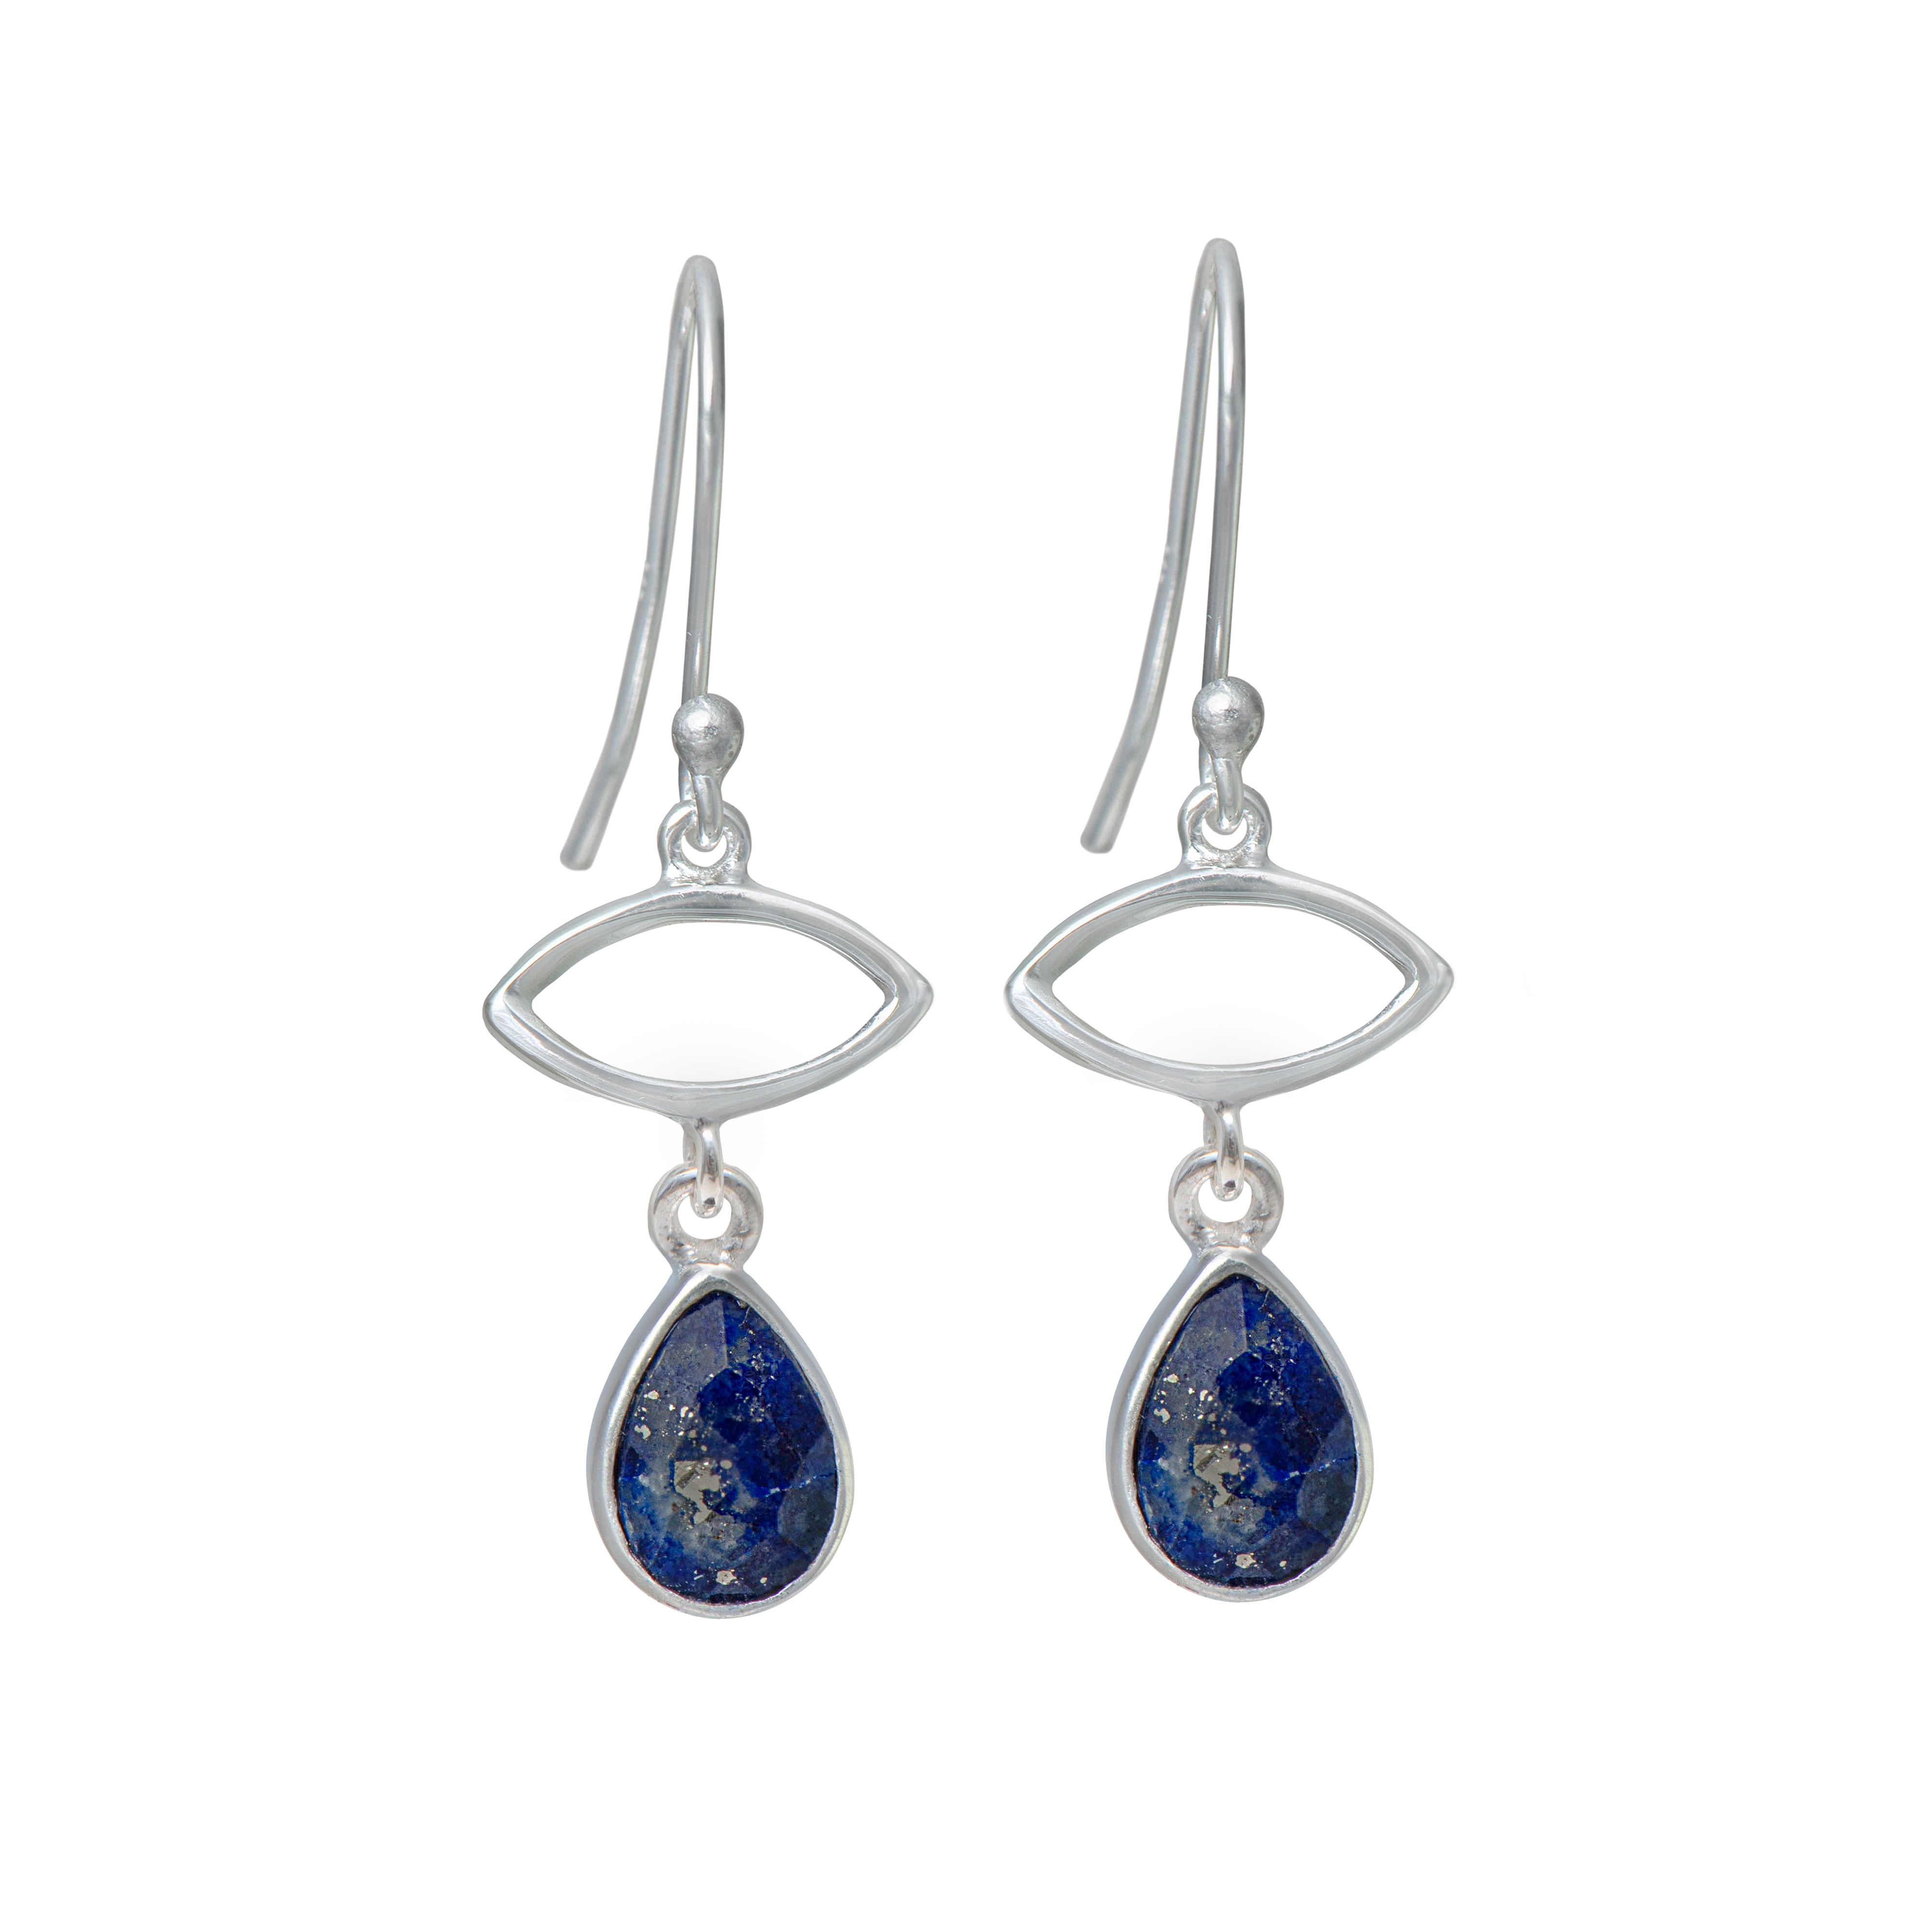 Silver Drop Earrings with Lapis Lazuli Gemstone